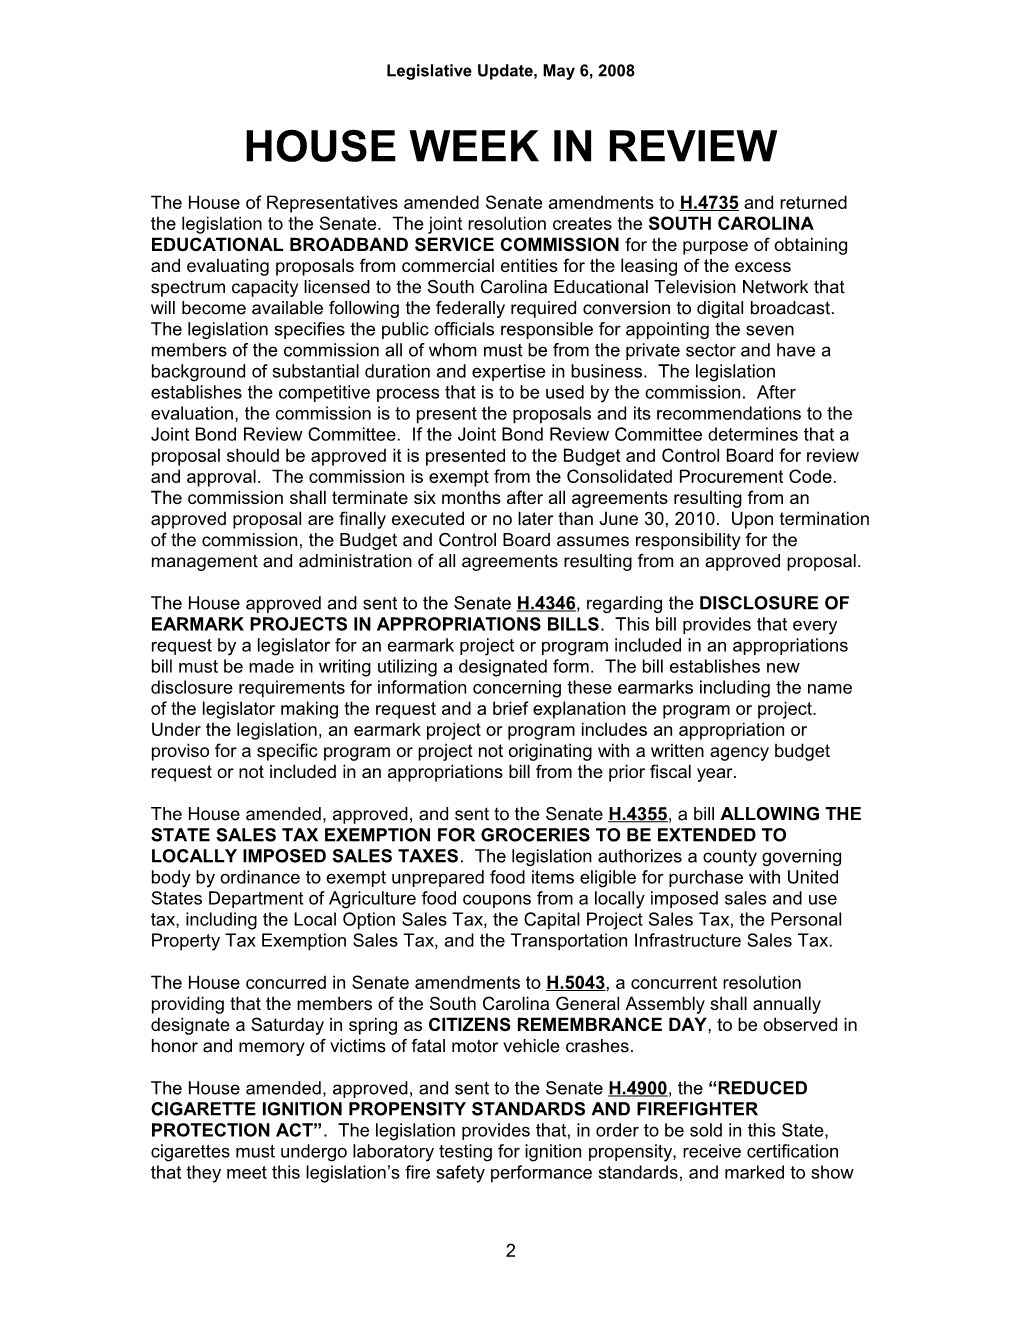 Legislative Update - Vol. 25 No. 17 May 6, 2008 - South Carolina Legislature Online